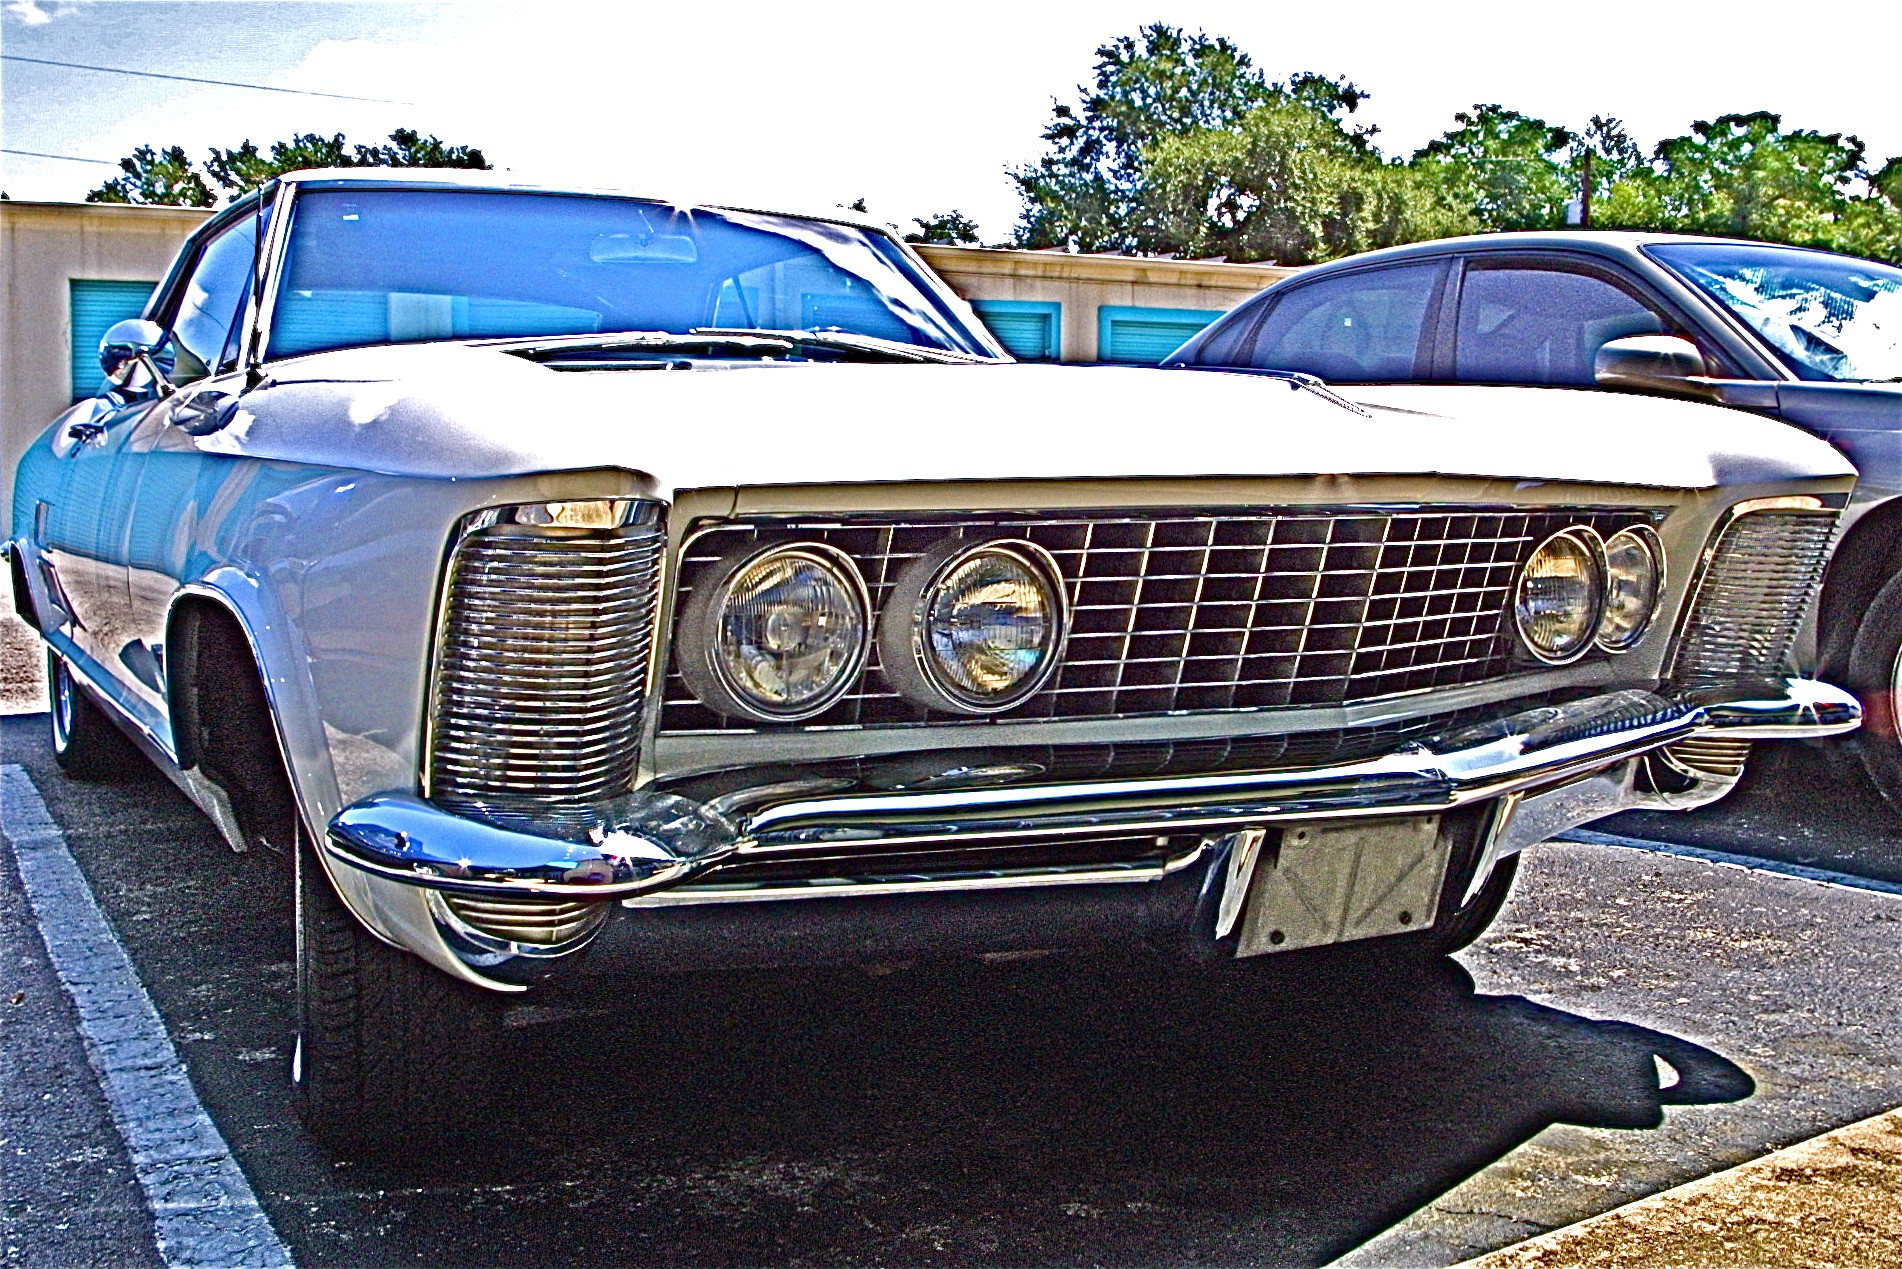 1963 Buick Riviera at Custom Sounds on S. Lamar